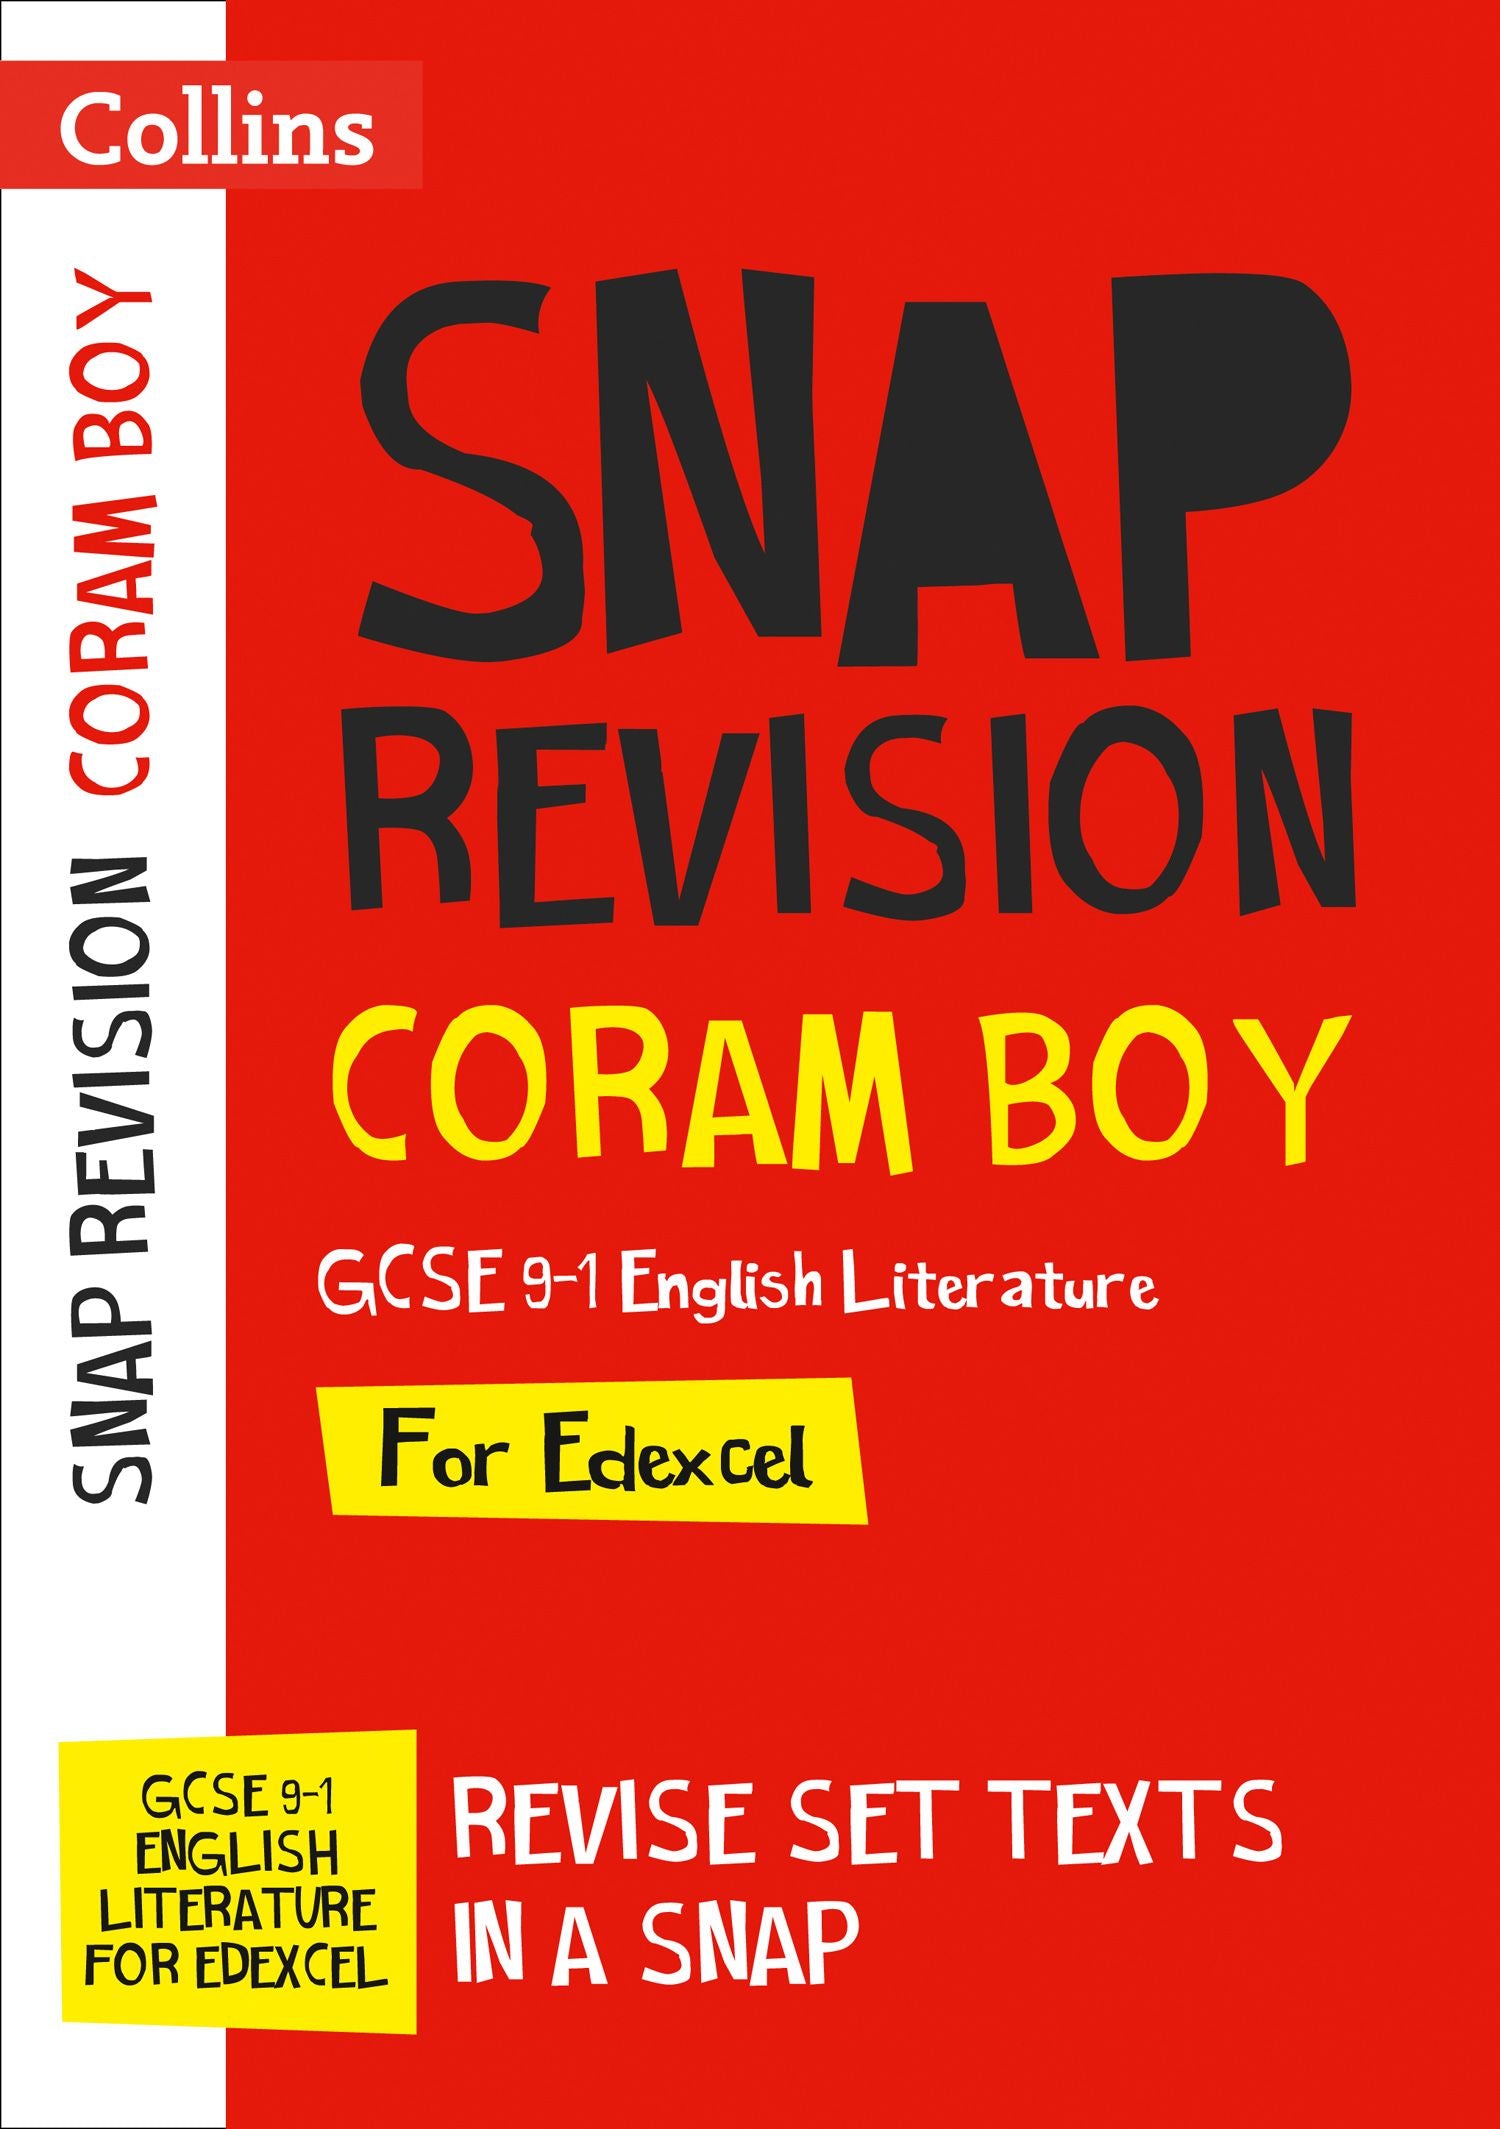 Collins GCSE Grade 9-1 SNAP Revision - Coram Boy Edexcel GCSE 9-1 Engl